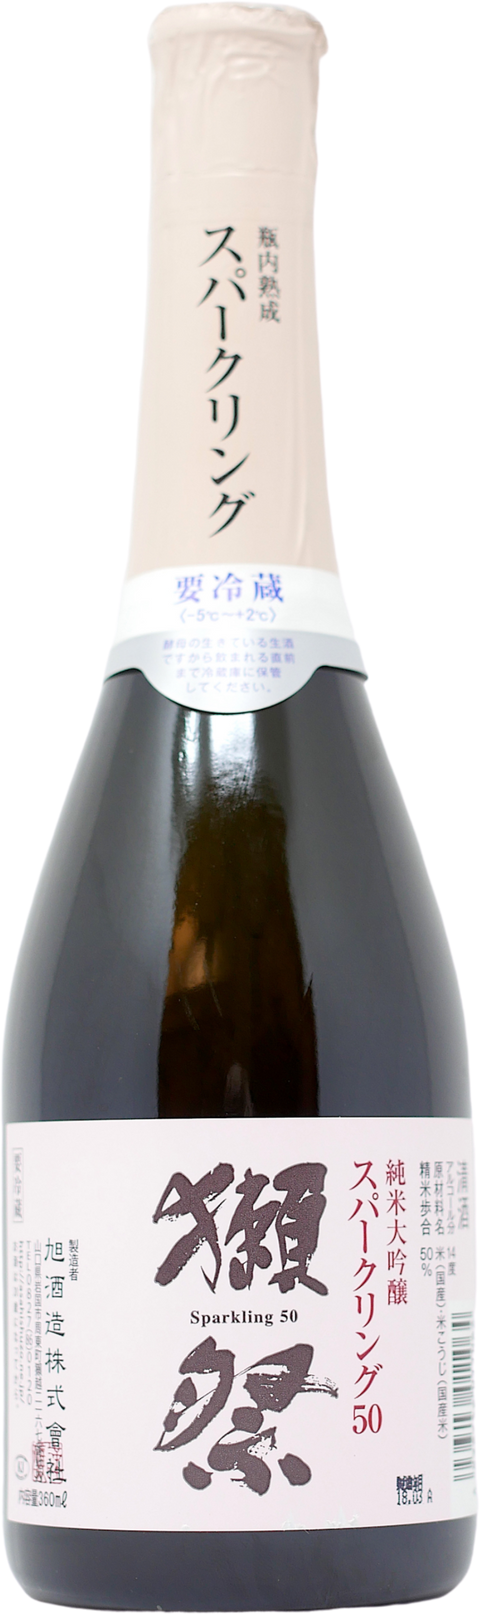 Asahi Shuzo (Yamaguchi), Dassai 50 Sparkling Nigori Junmai Daiginjo Sake 360mL